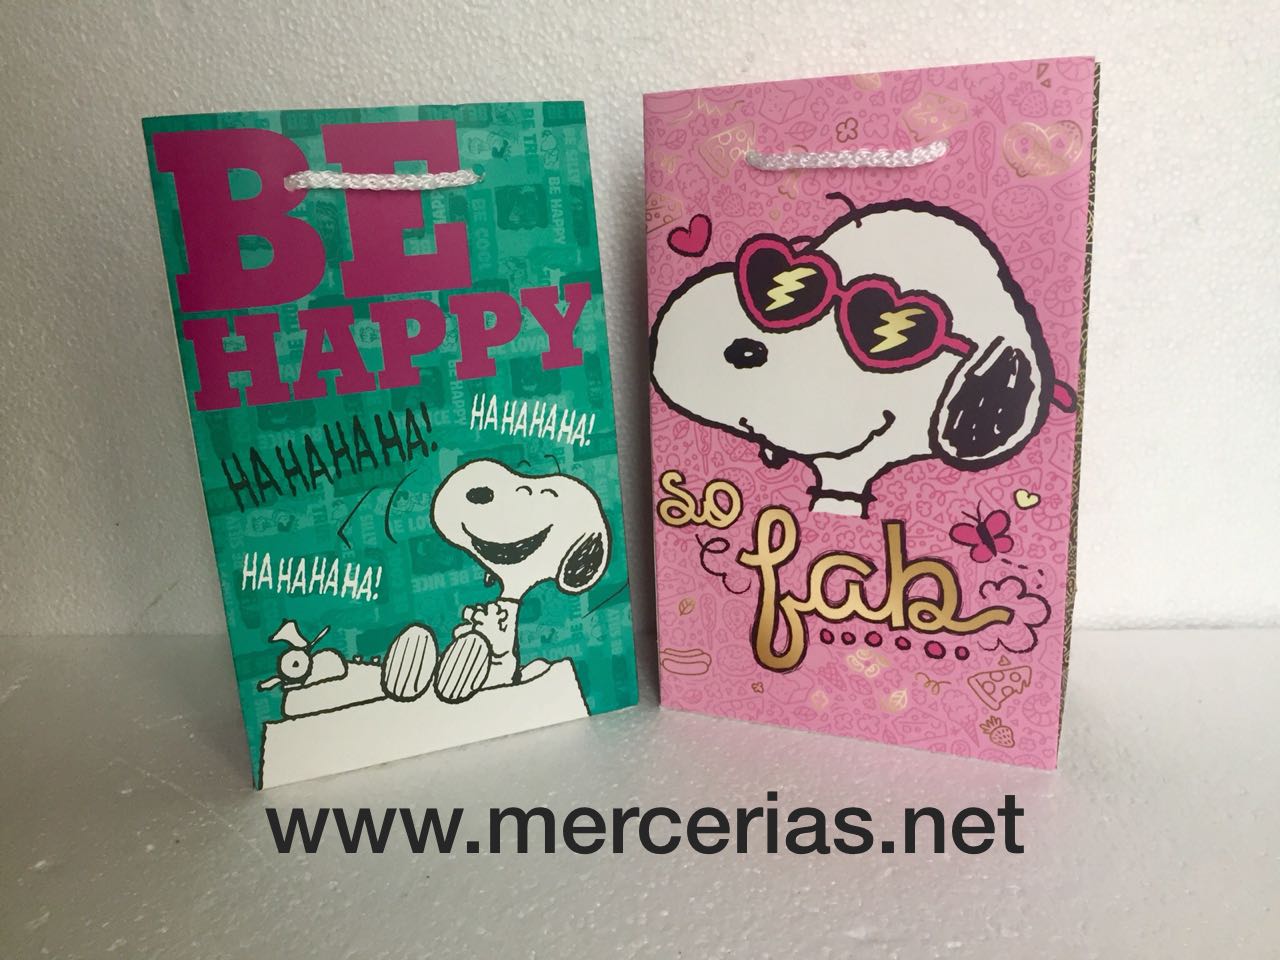 Bolsa para Regalo Snoopy M-4457 - Merceria en Linea